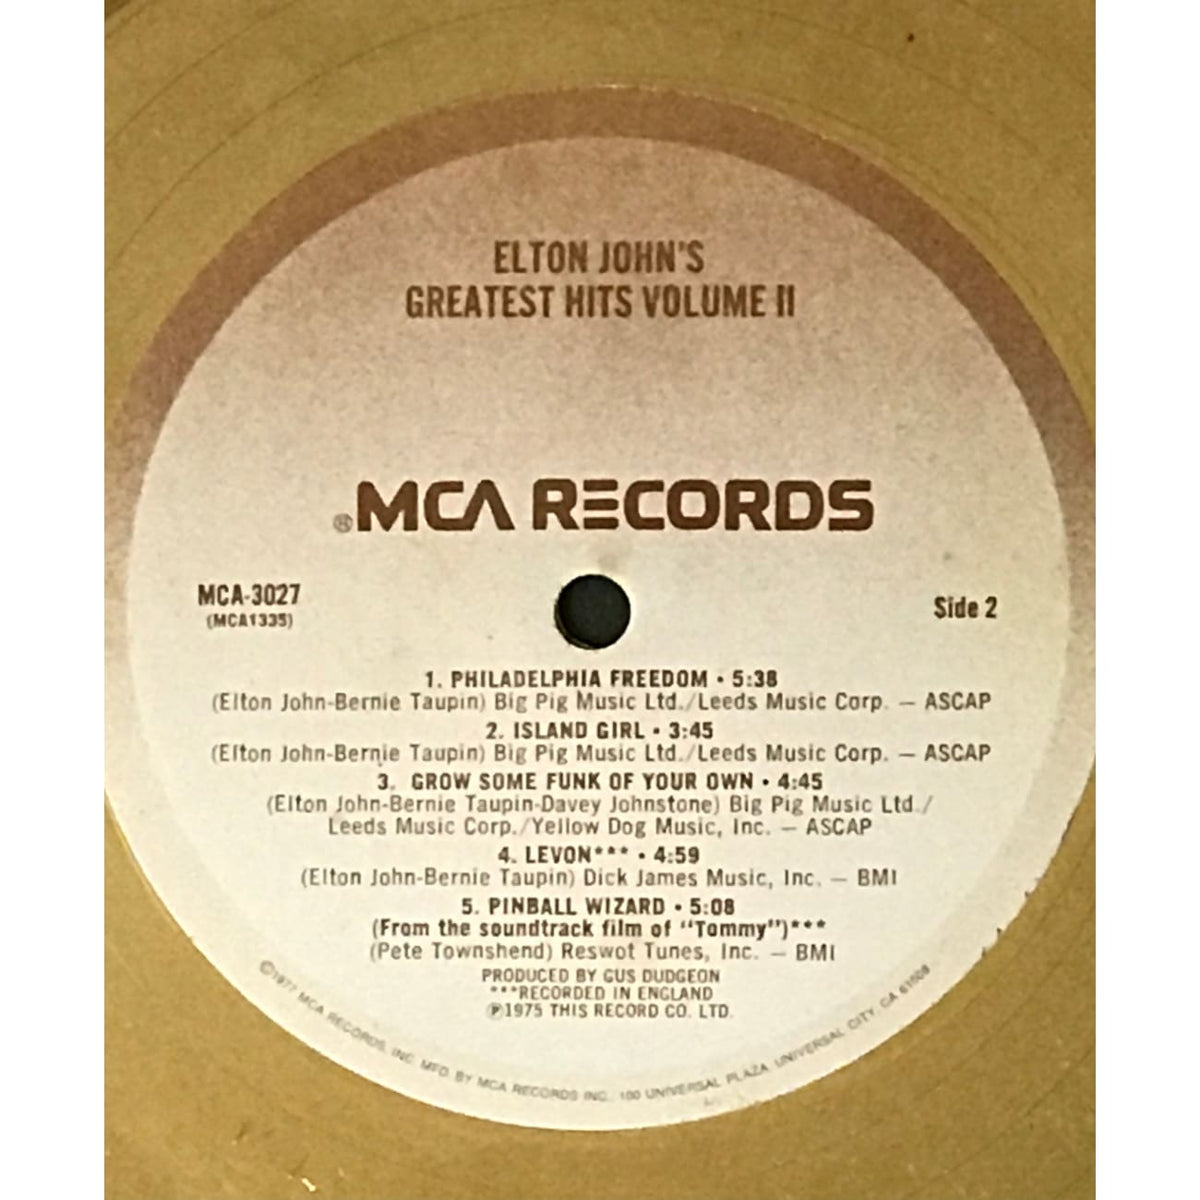  Elton John Greatest Hits Vol II RIAA Gold Album Award –